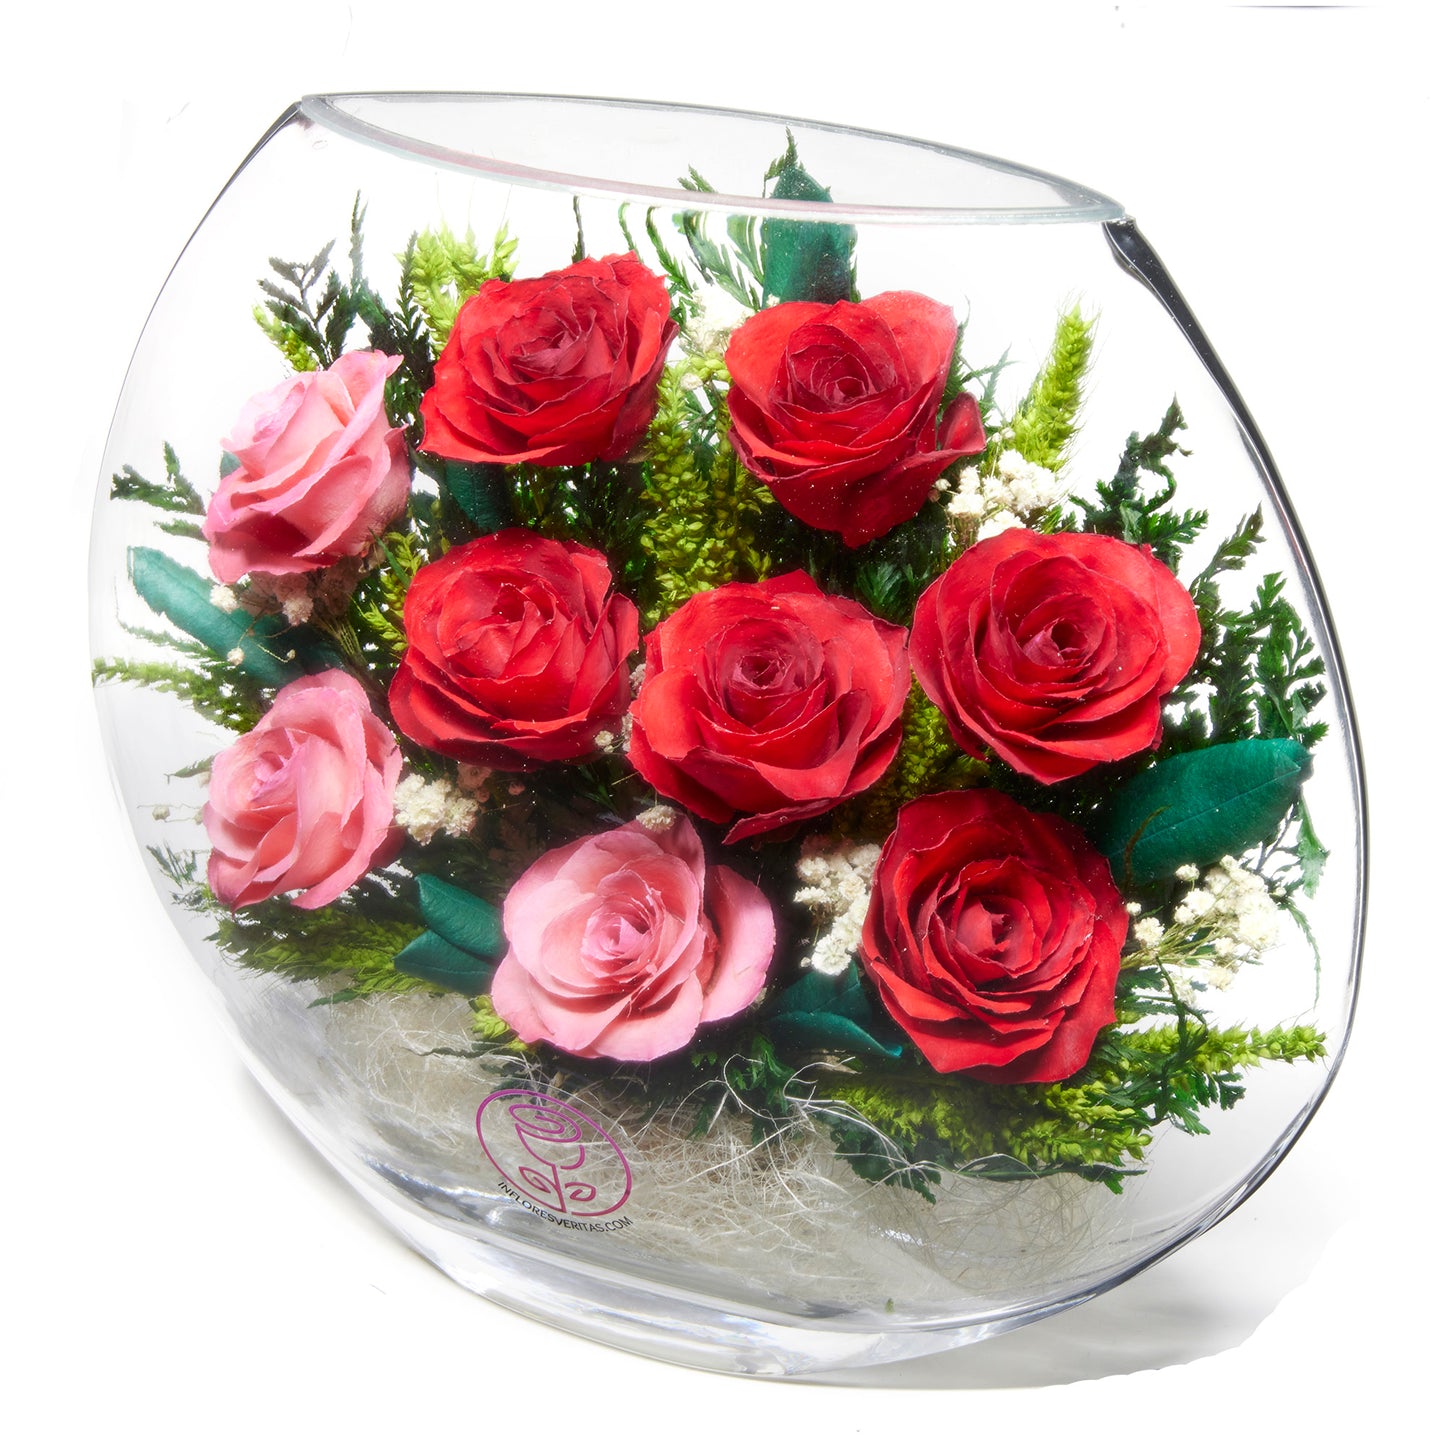 Roses Bouquet Wonderland: Enchanting World of Pink & Red Roses